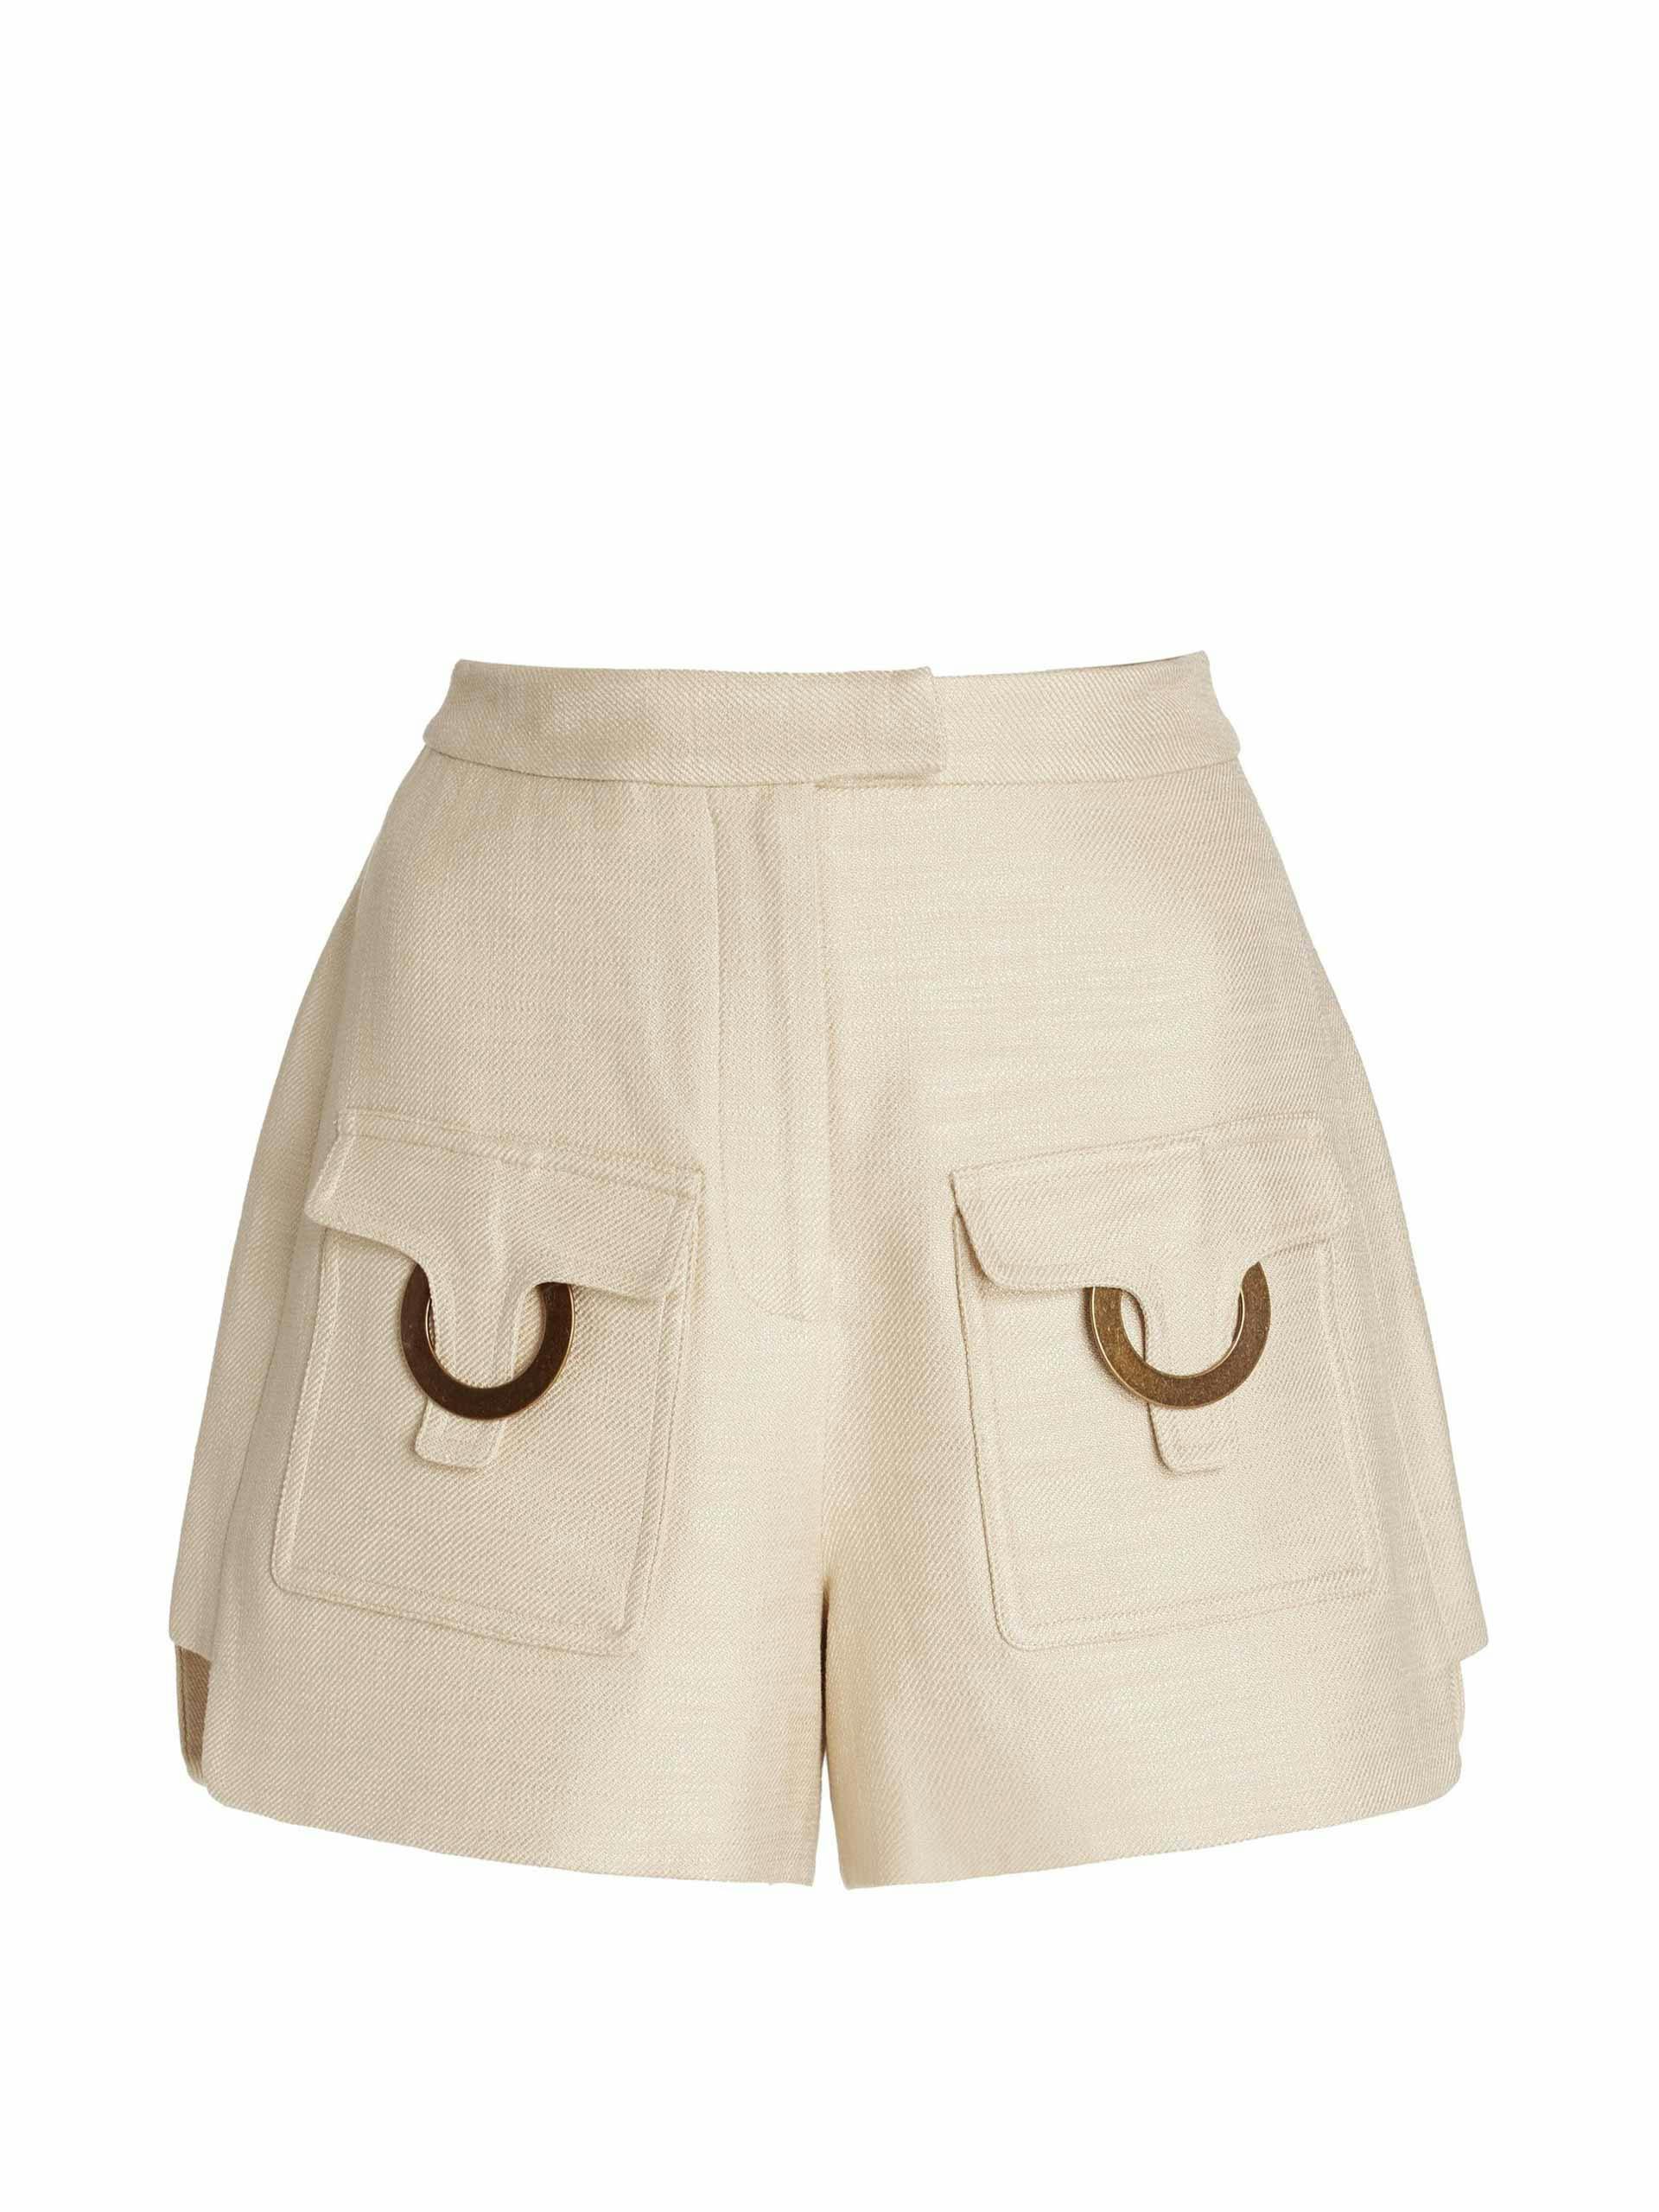 Beige woven safari shorts